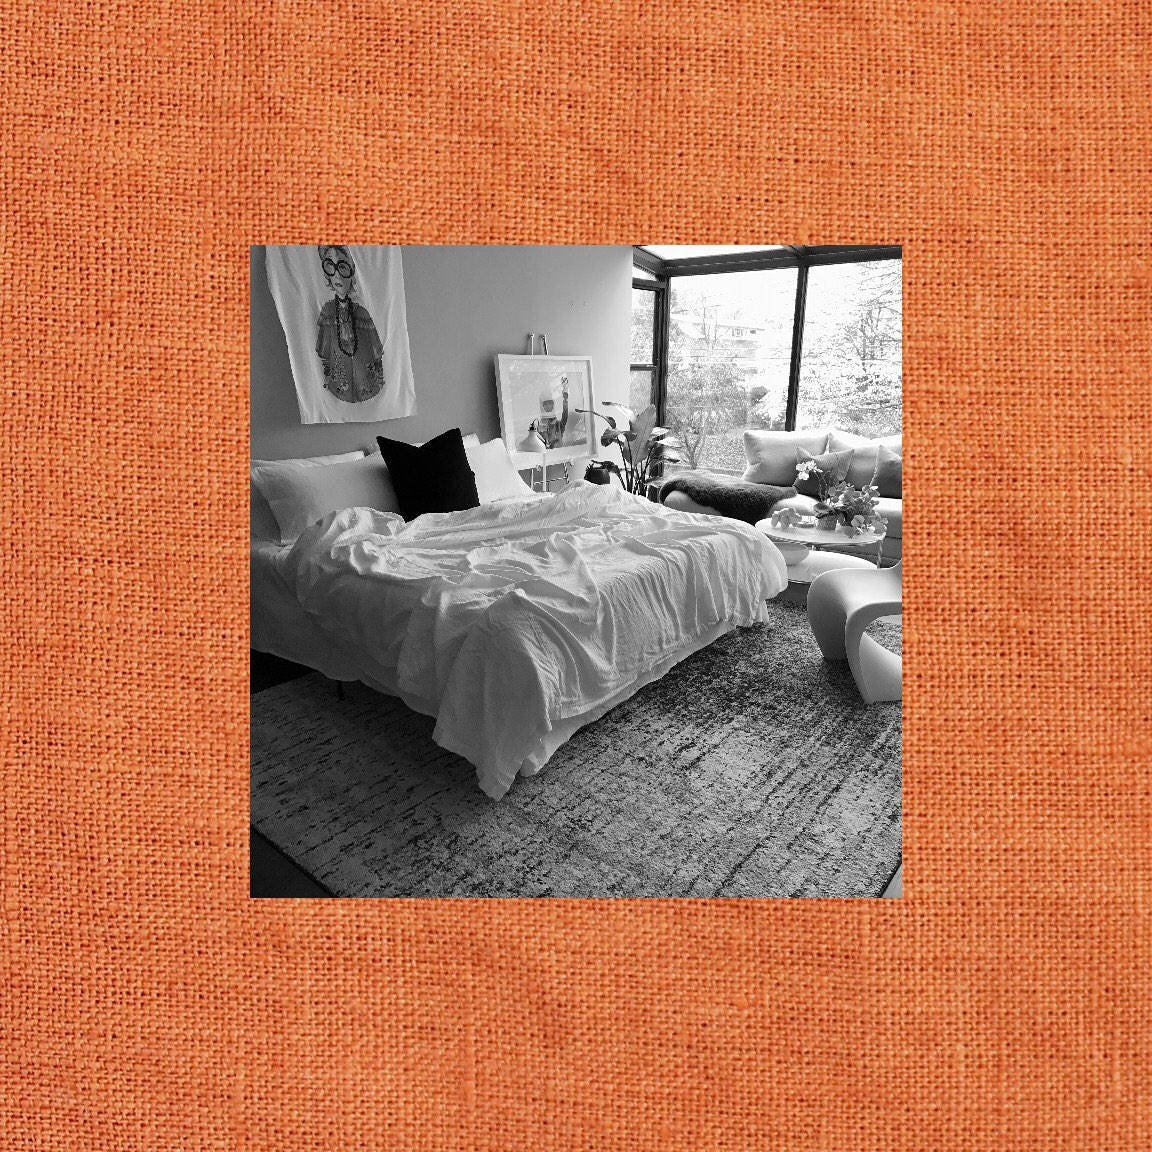 Coral Orange Linen Coverlet - Solid Bedspread Designer Bedding Made To Order in The Usa Soft